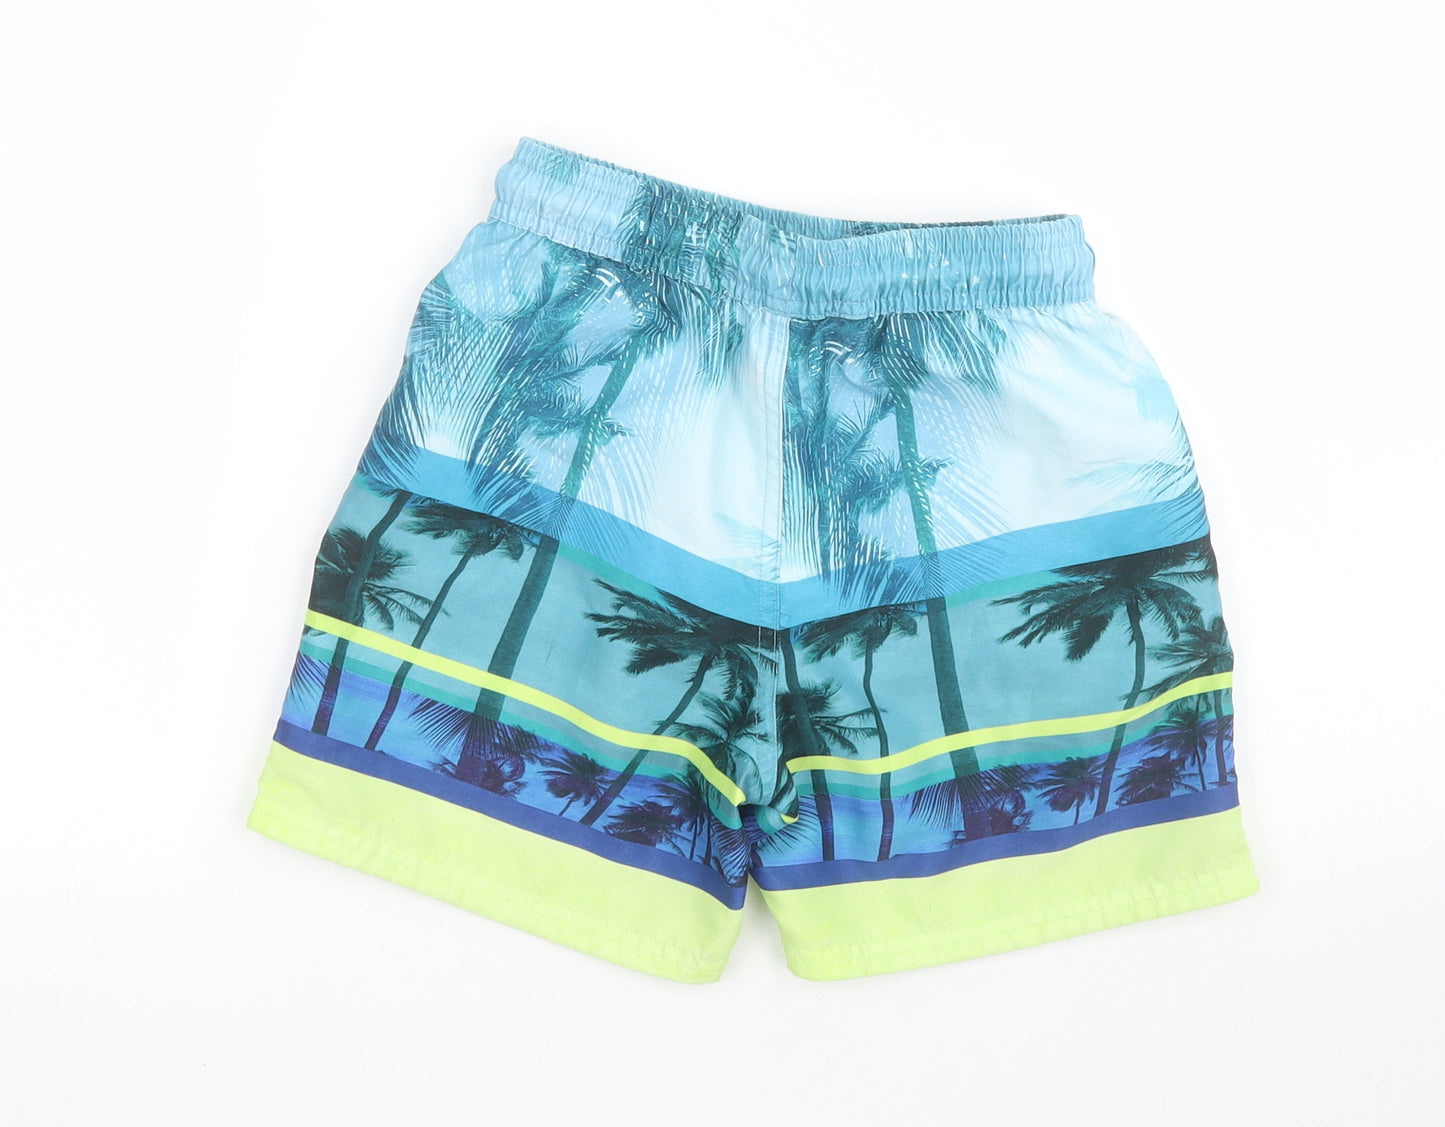 Marks and Spencer Boys Blue  100% Polyester Sweat Shorts Size 7-8 Years  Regular Drawstring - Swim short